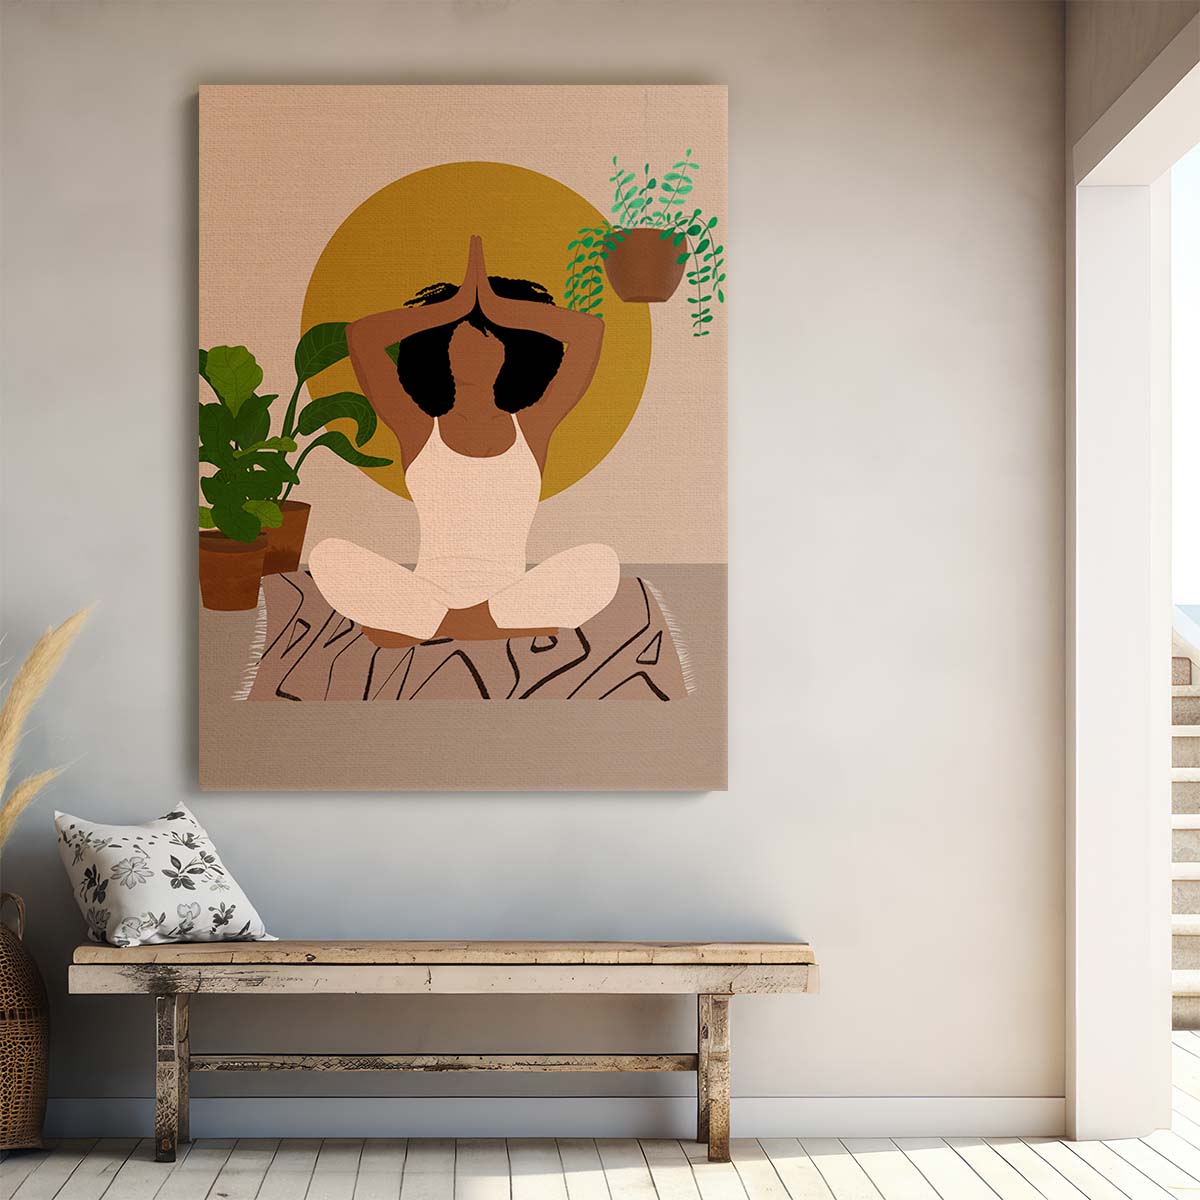 Spiritual Woman Meditating in Serene Botanical Zen Illustration Art by Luxuriance Designs, made in USA